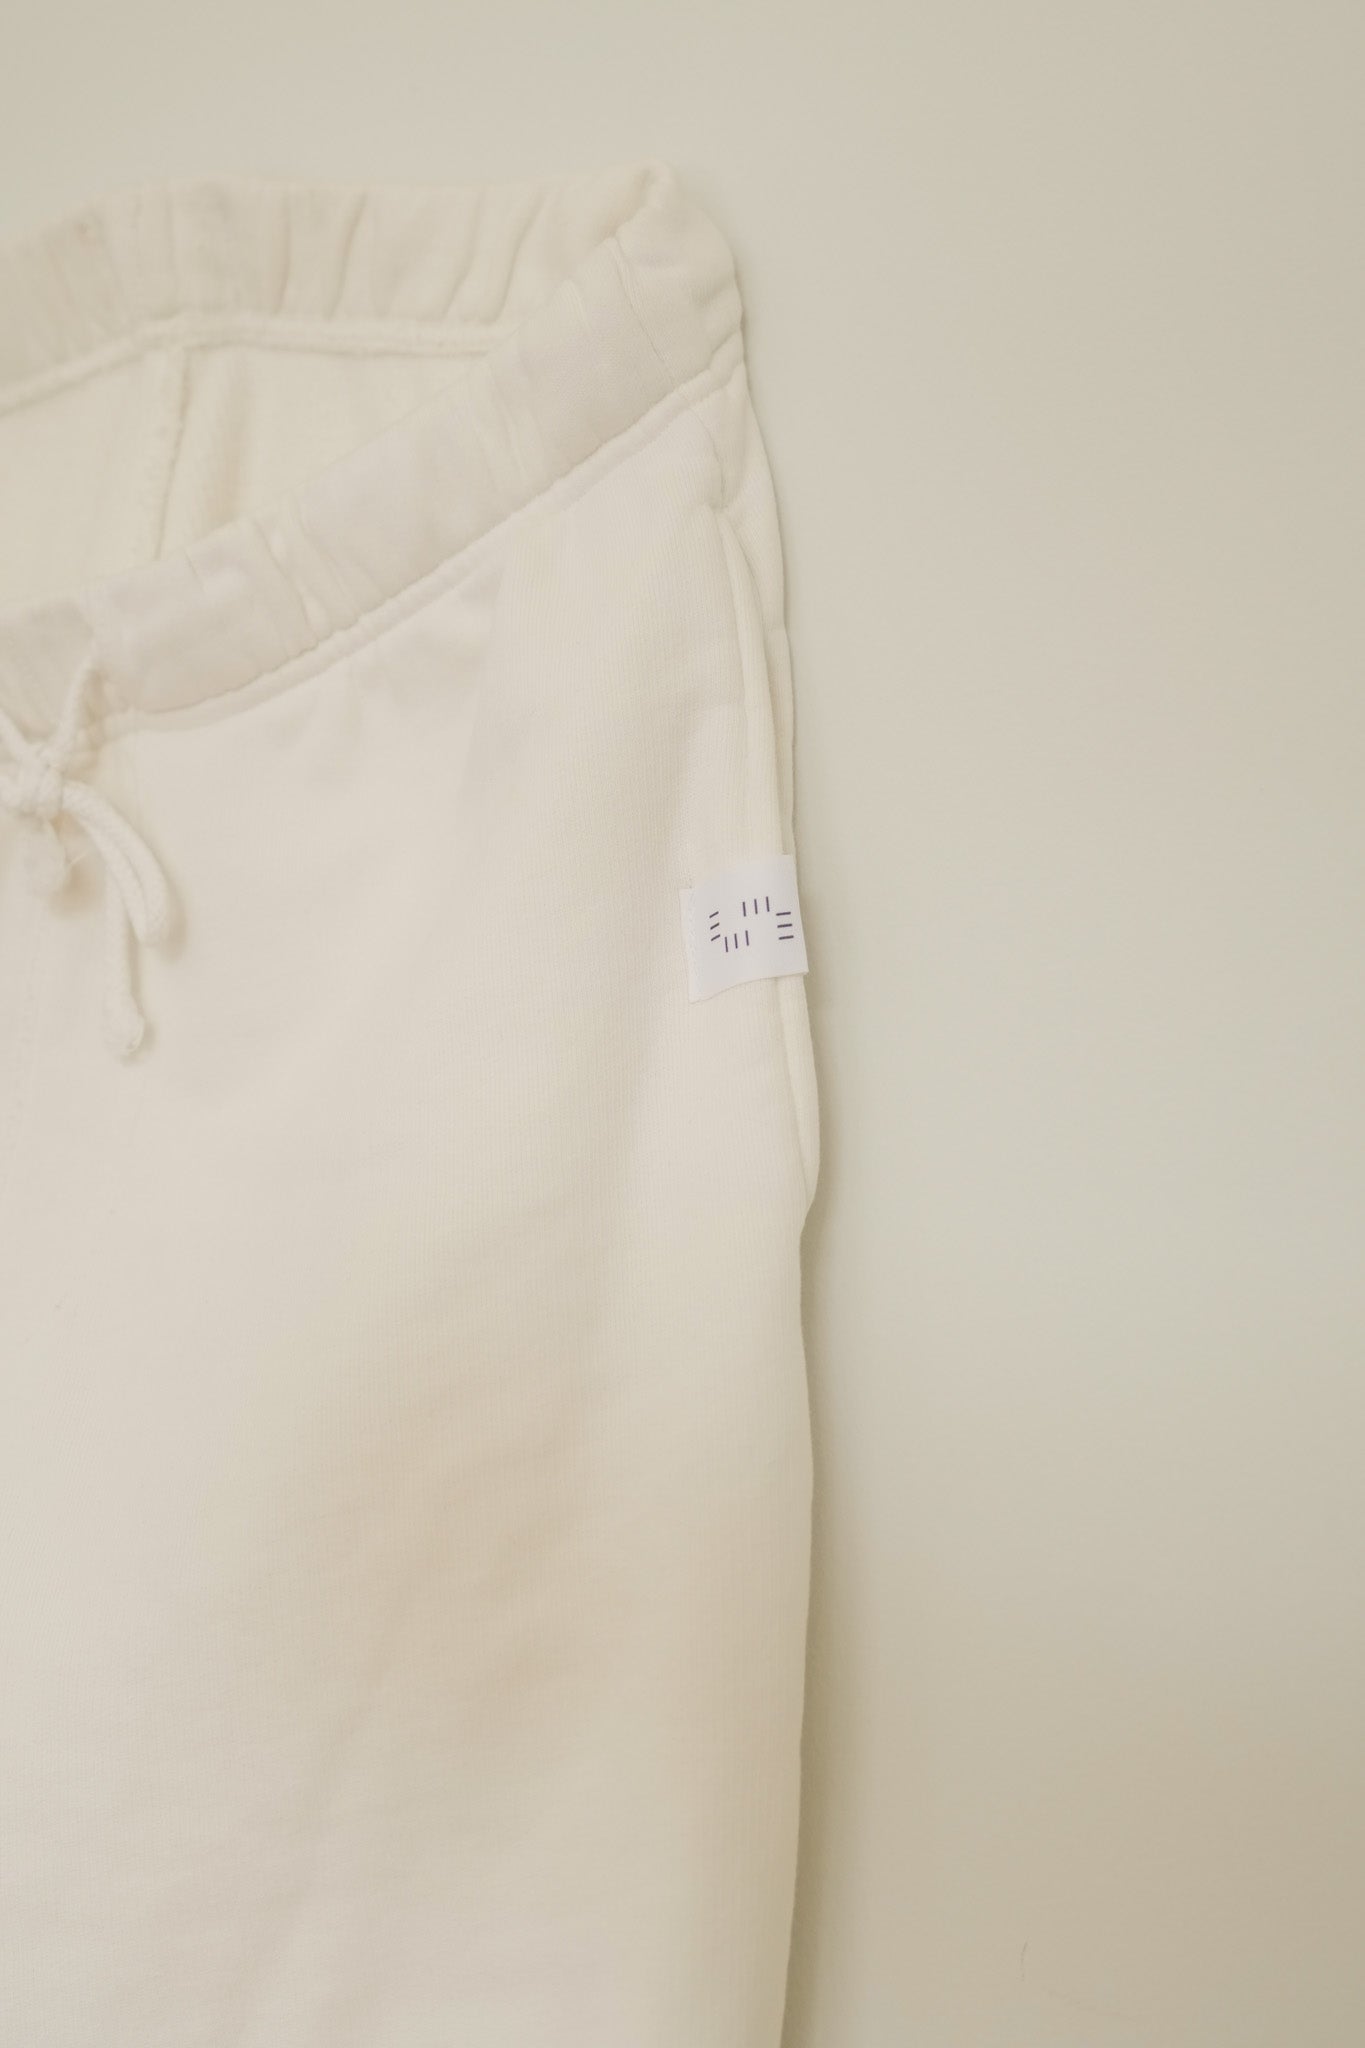 sweatpants - vintage white